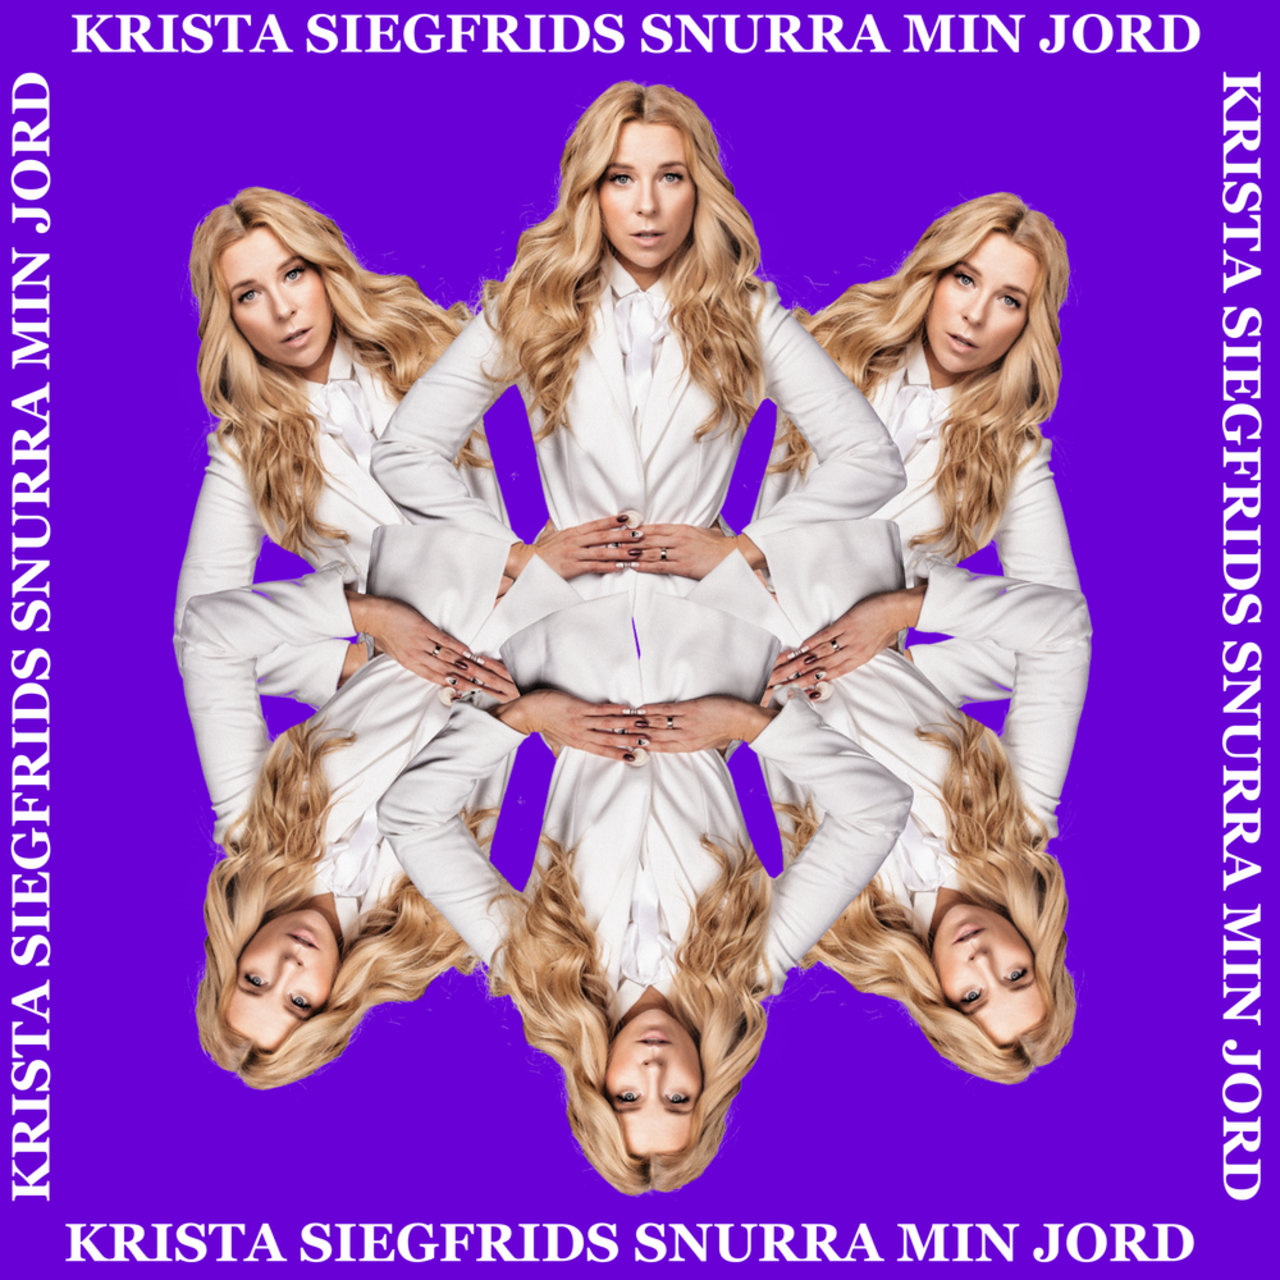 Krista Siegfrids Snurra min jord cover artwork